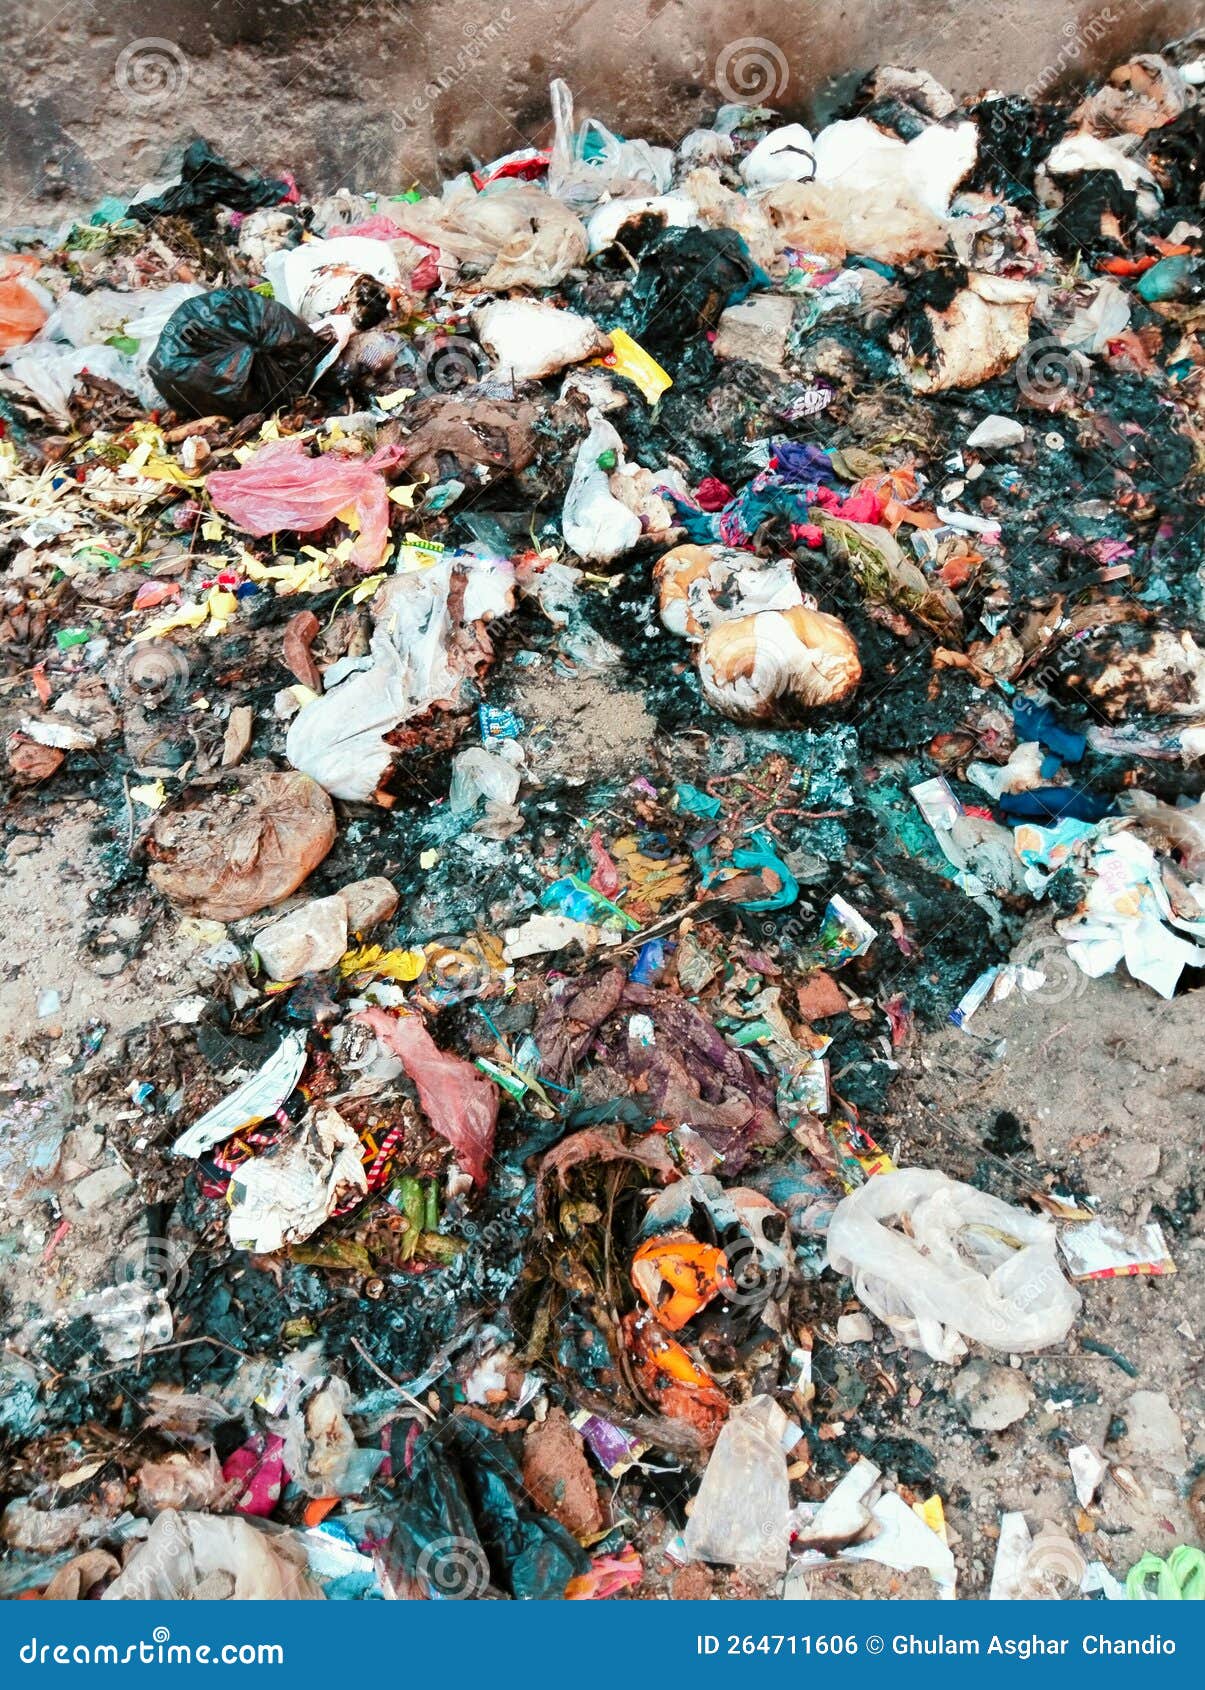 garbage heap waste garbage-pile trash rubbish dump litter dirty solid-rubbish scrap refuse plasticbags landfill photo